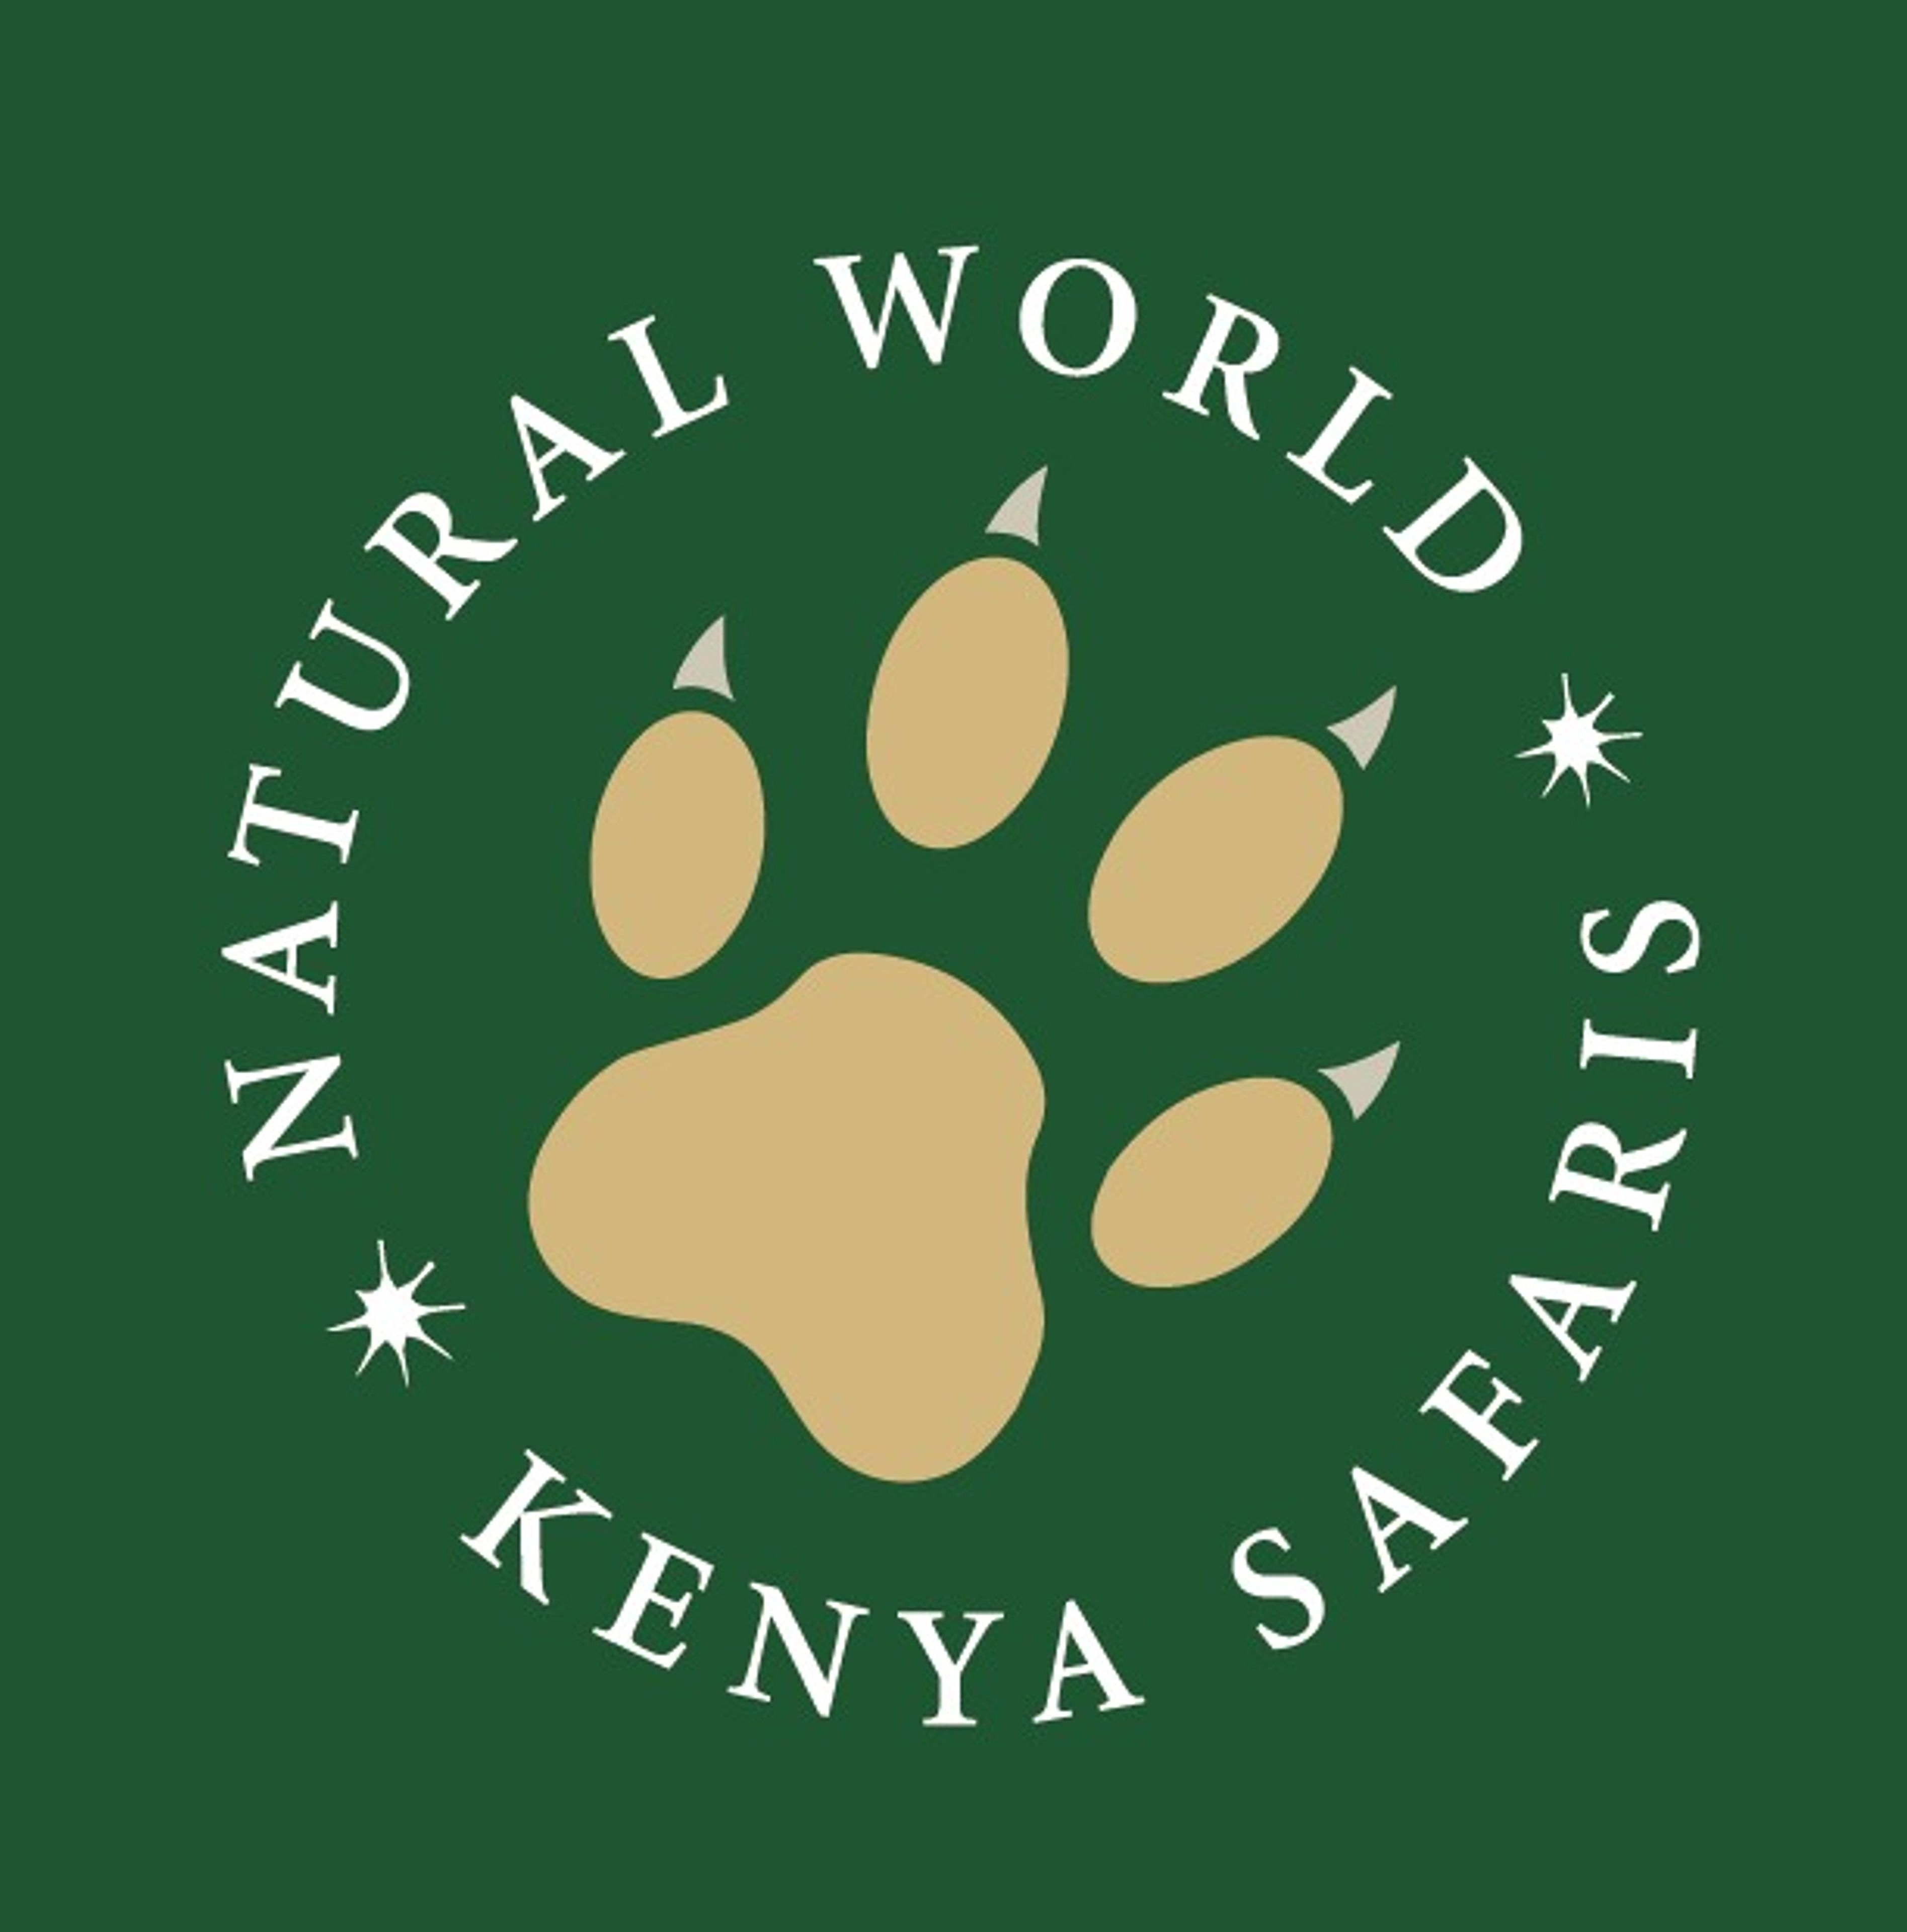 Audio Tours with Natural World Kenya Safaris cover image